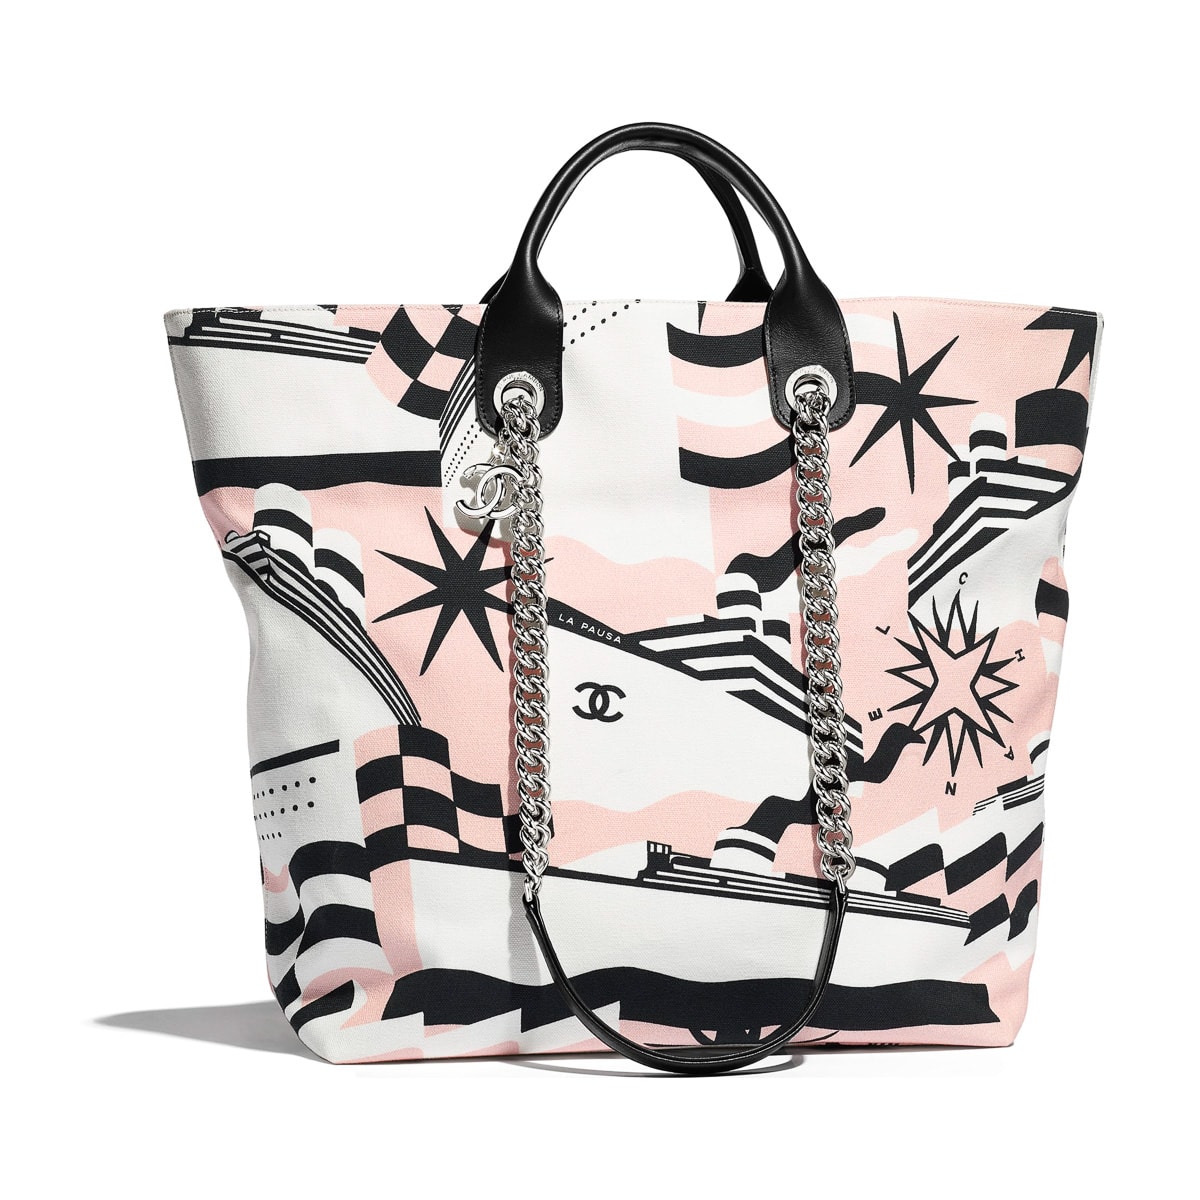 Chanel Bag Price Canada 2019 | SEMA Data Co-op